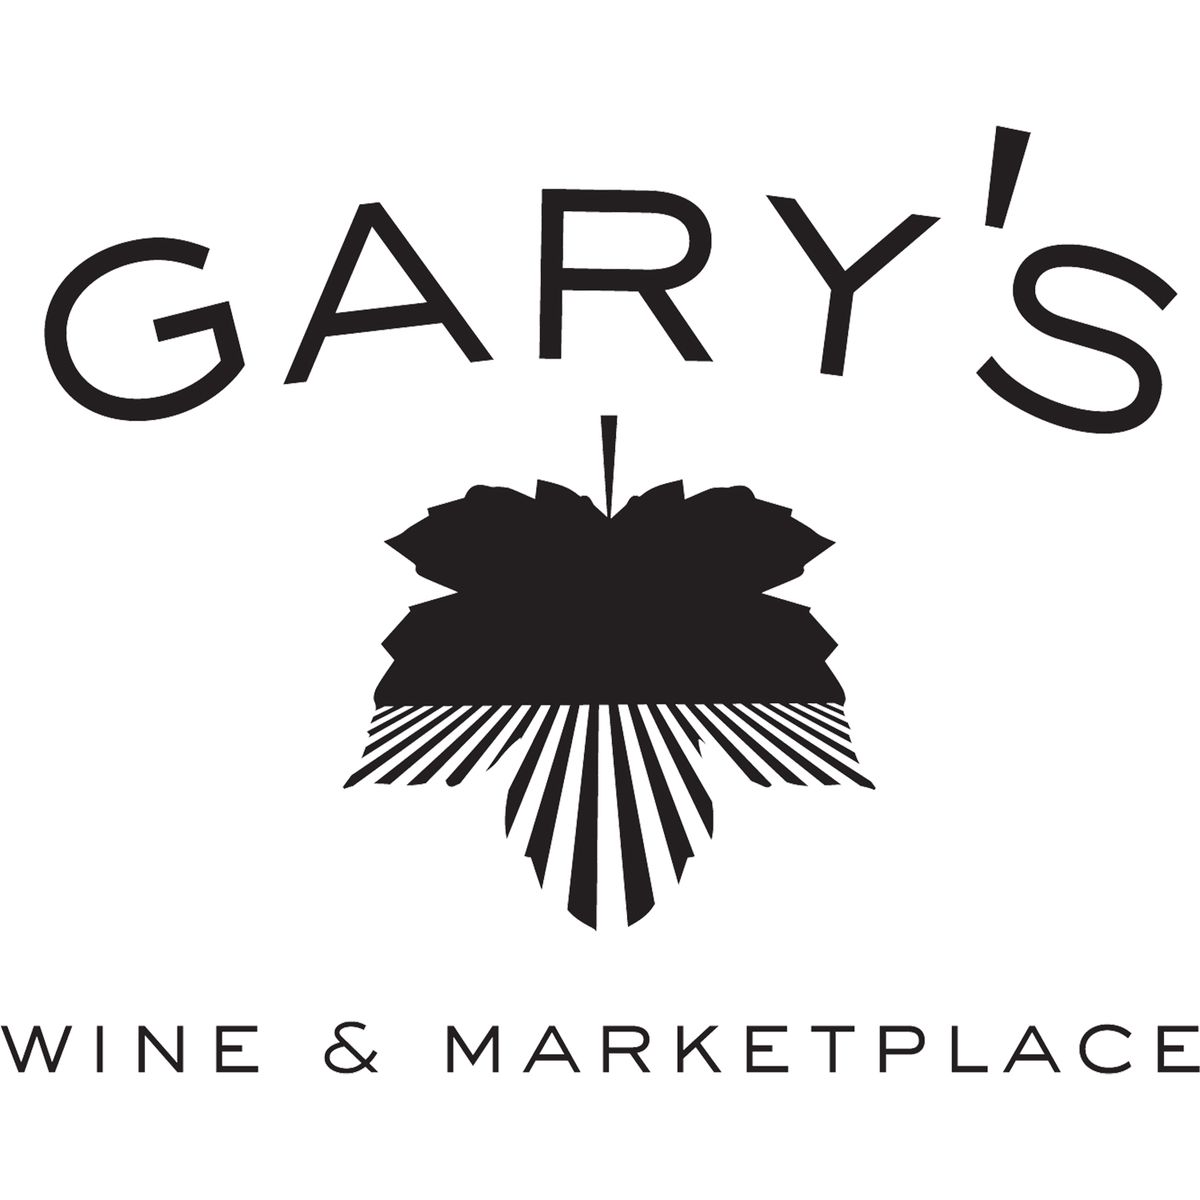 Gary's Wine and Marketplace logo